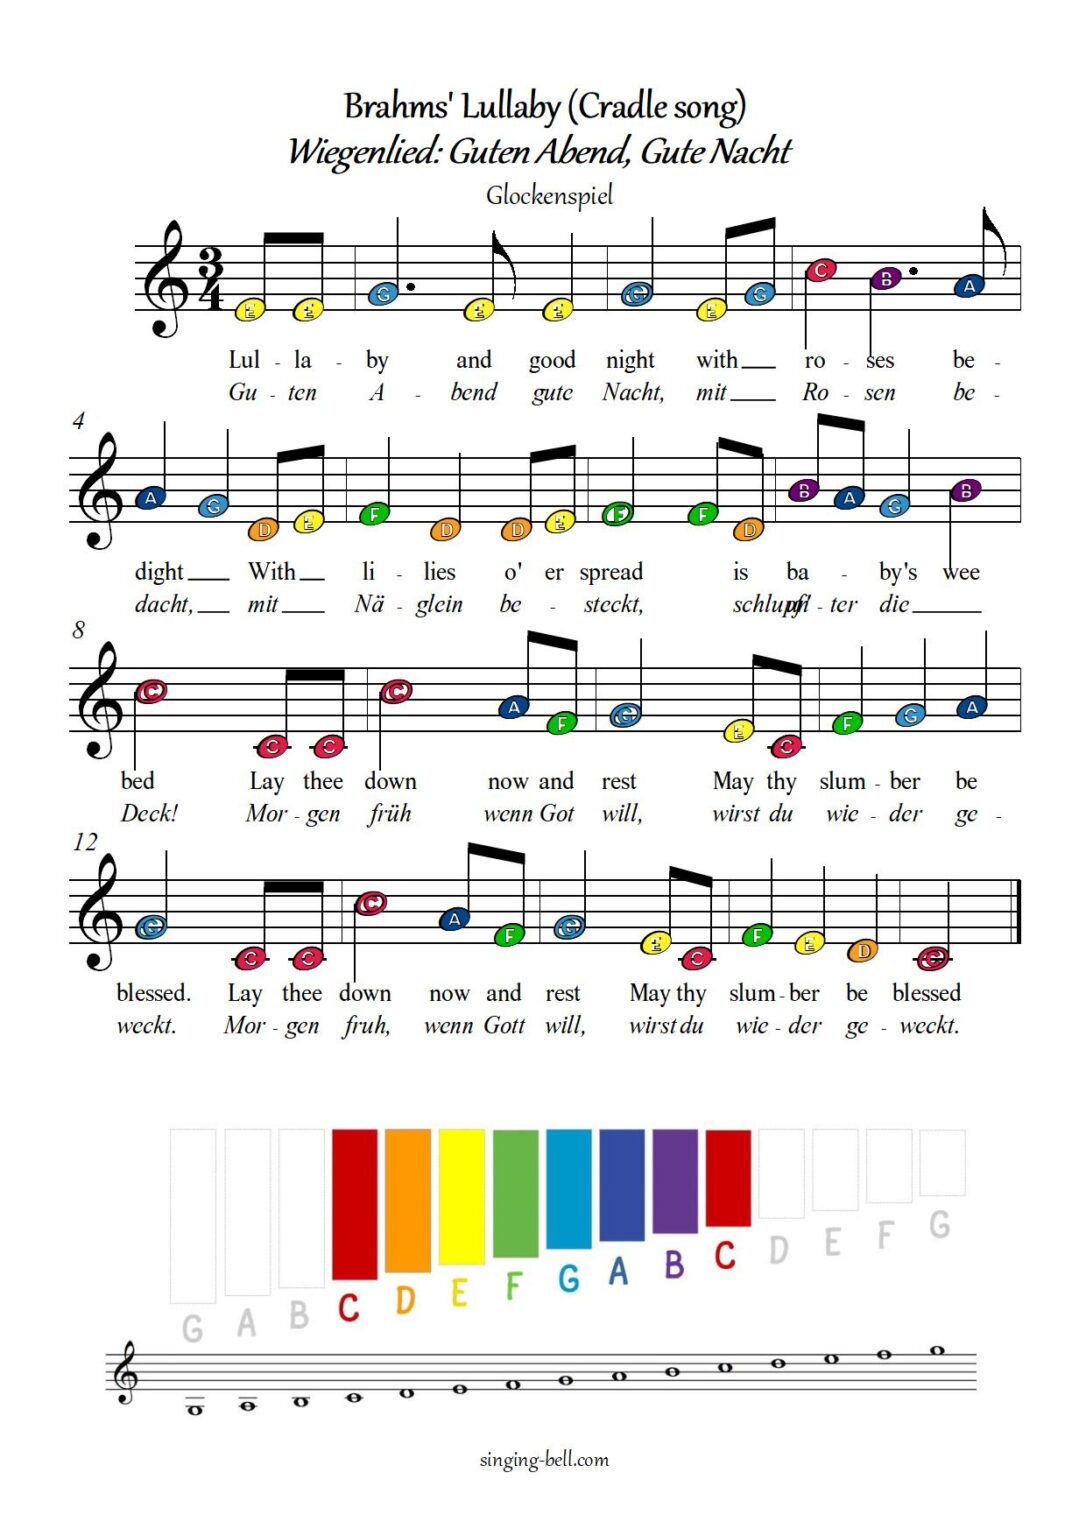 Brahms' Lullaby for Glockenspiel / Xylophone